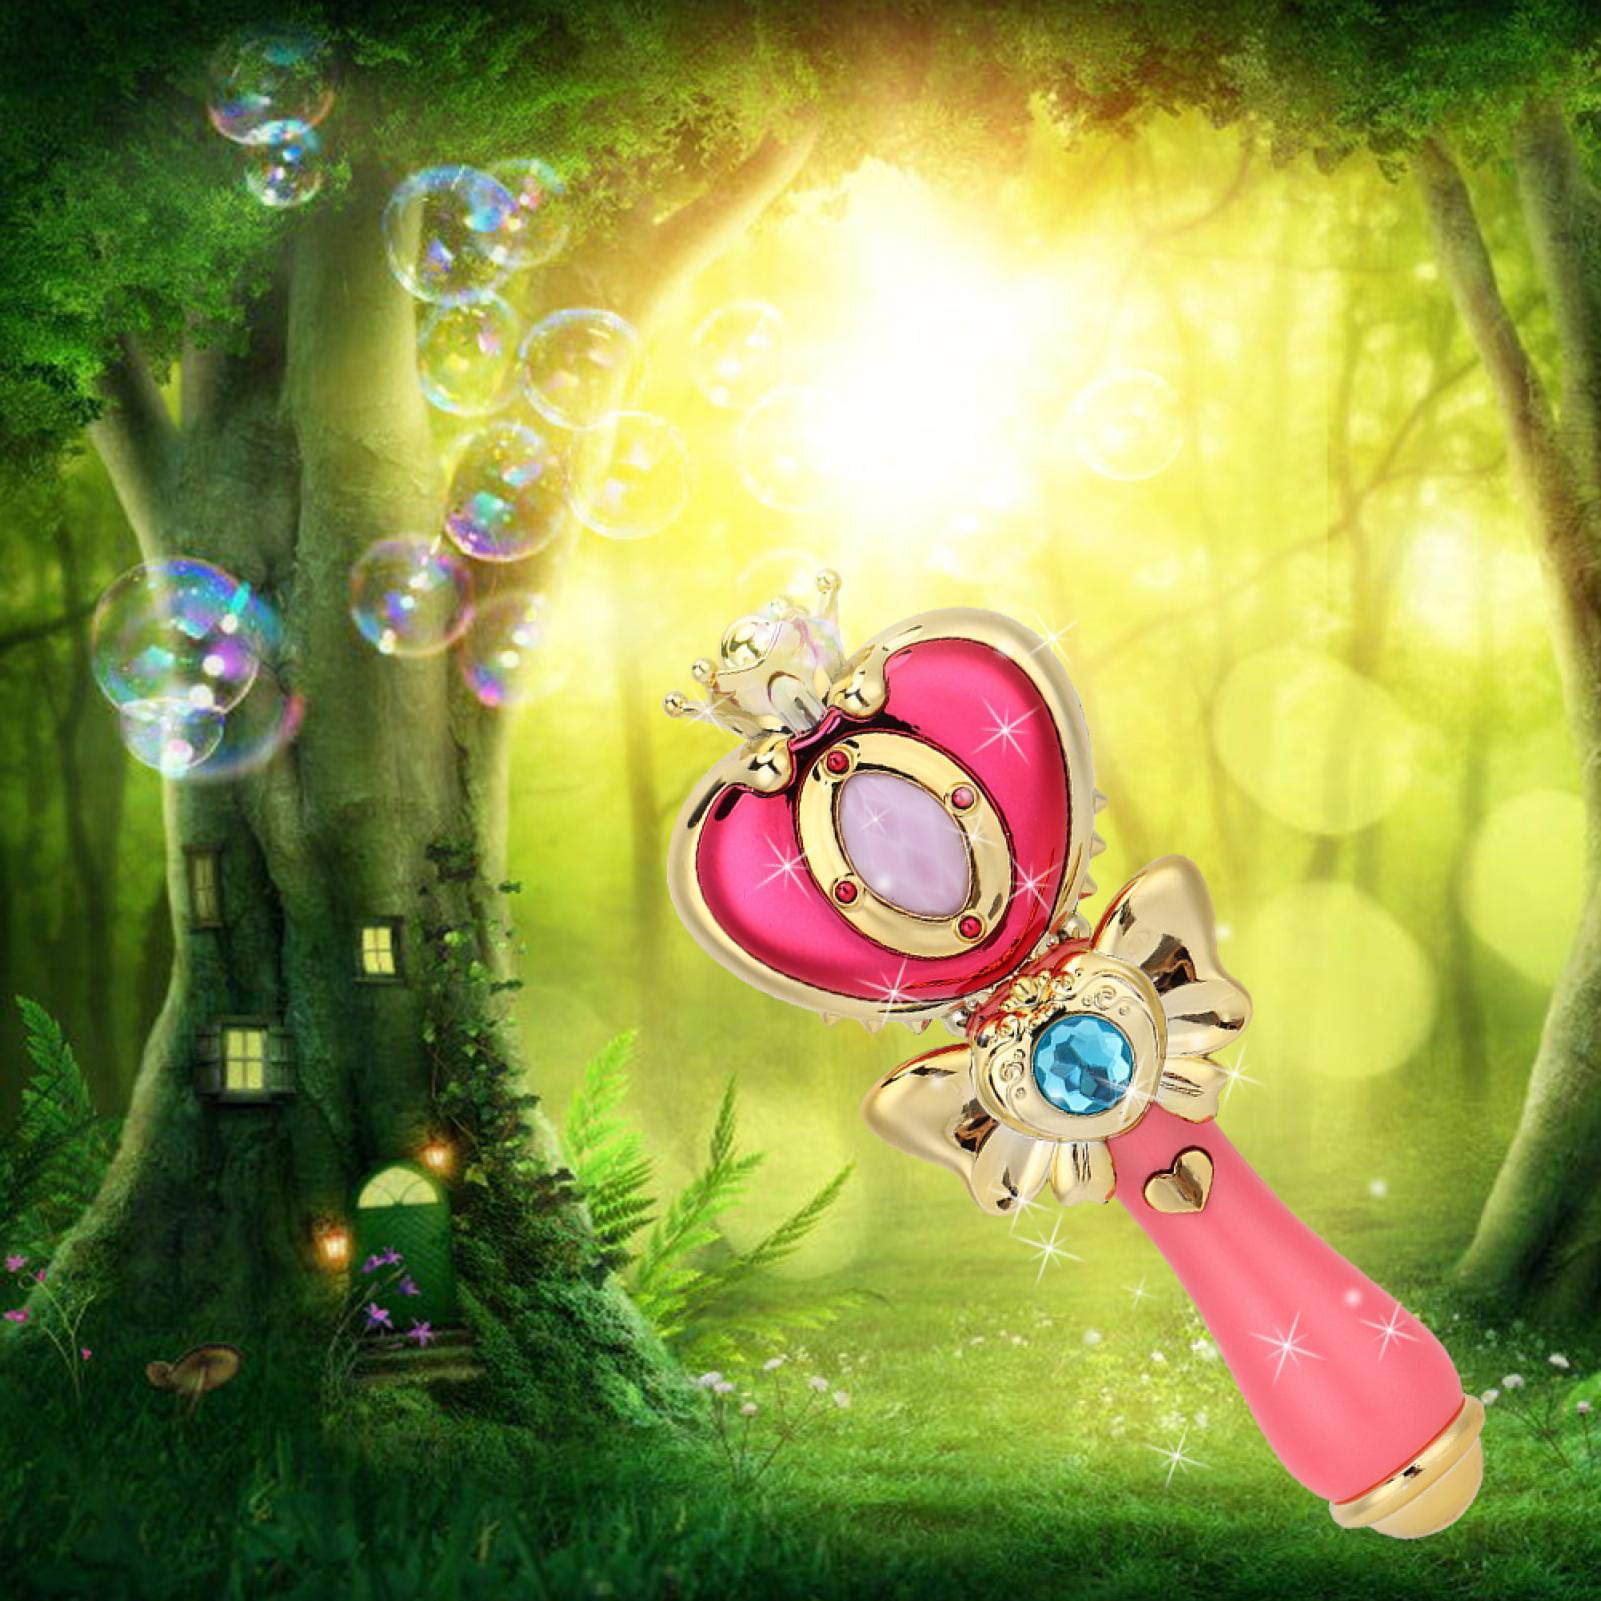 Cute Kids Fairy Wand Kids Cartoon Magic Fairy Stick with Music Luminous for Garden Home Yard Party Keenso Childrens Magic Fairy Stick 